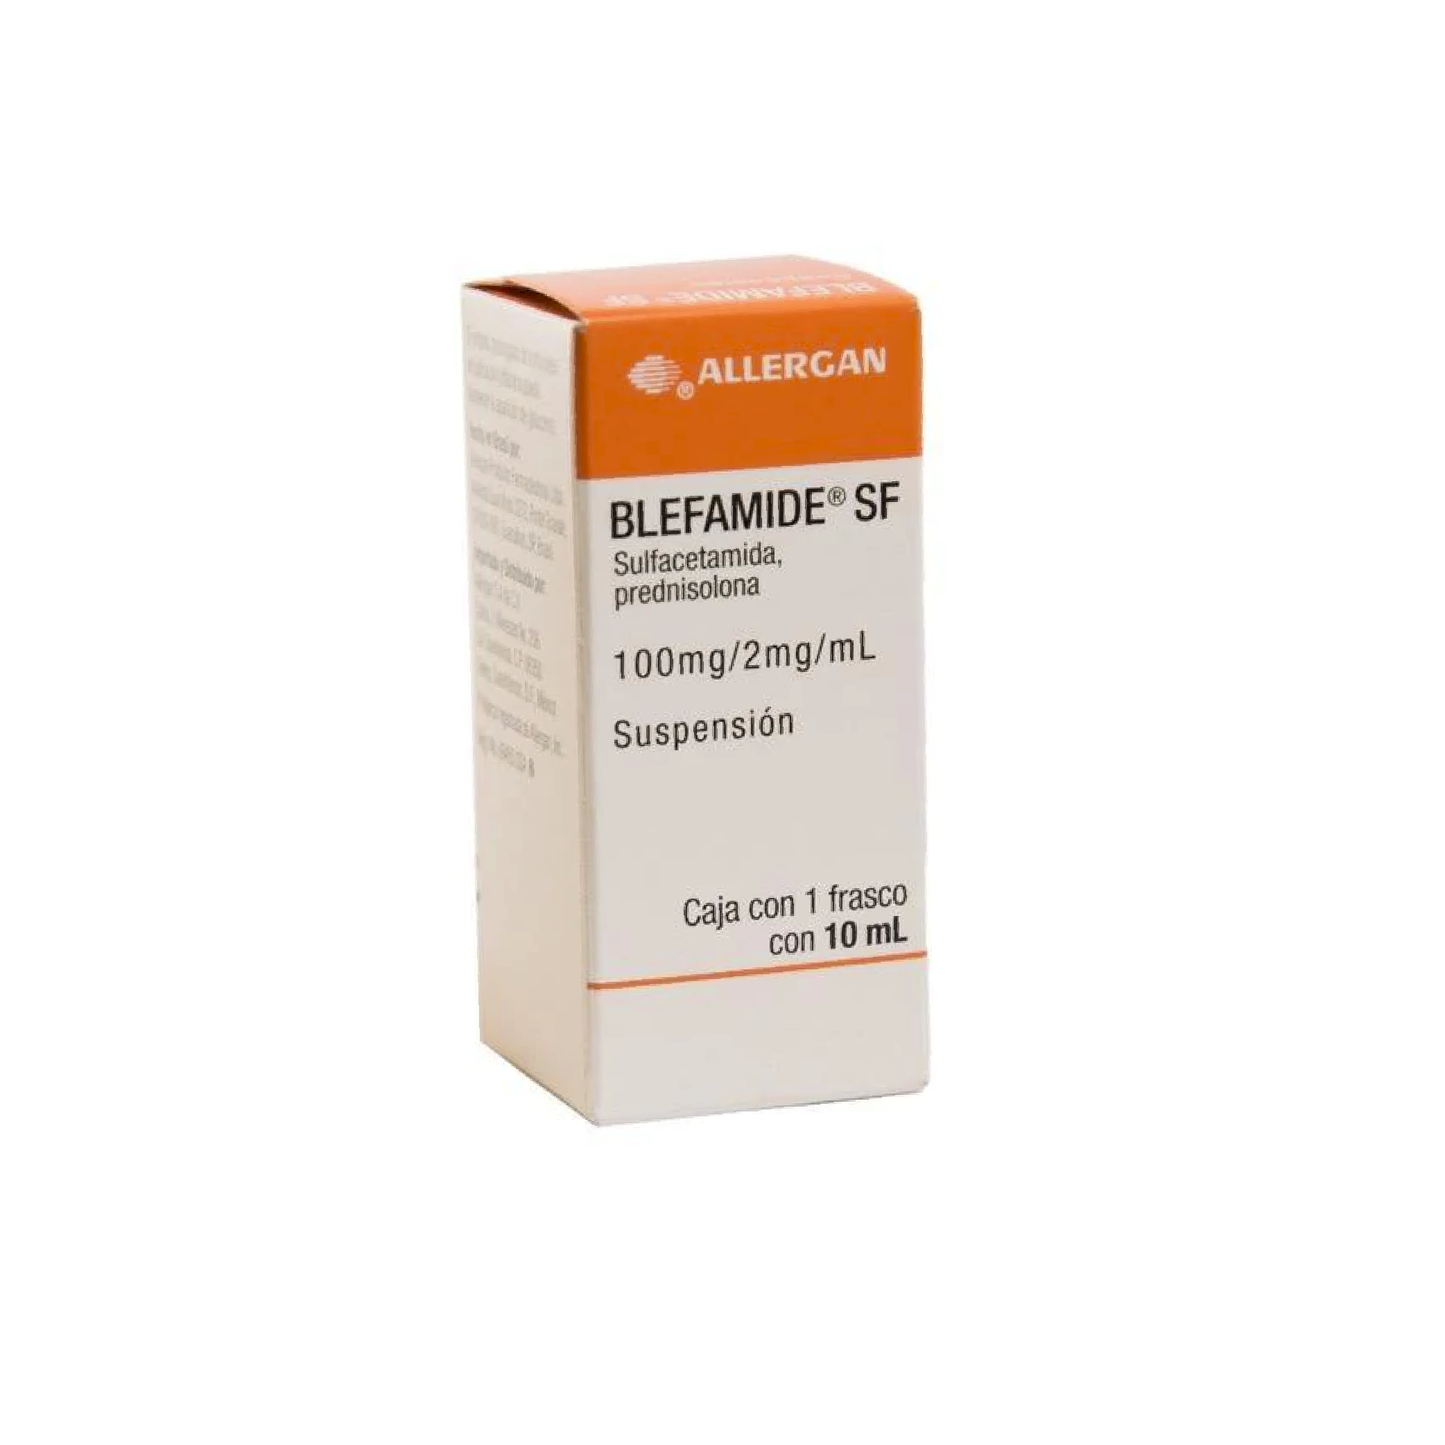 Blefamide SF (Sulfacetamida, prednisolona) 100mg/2mg/ml